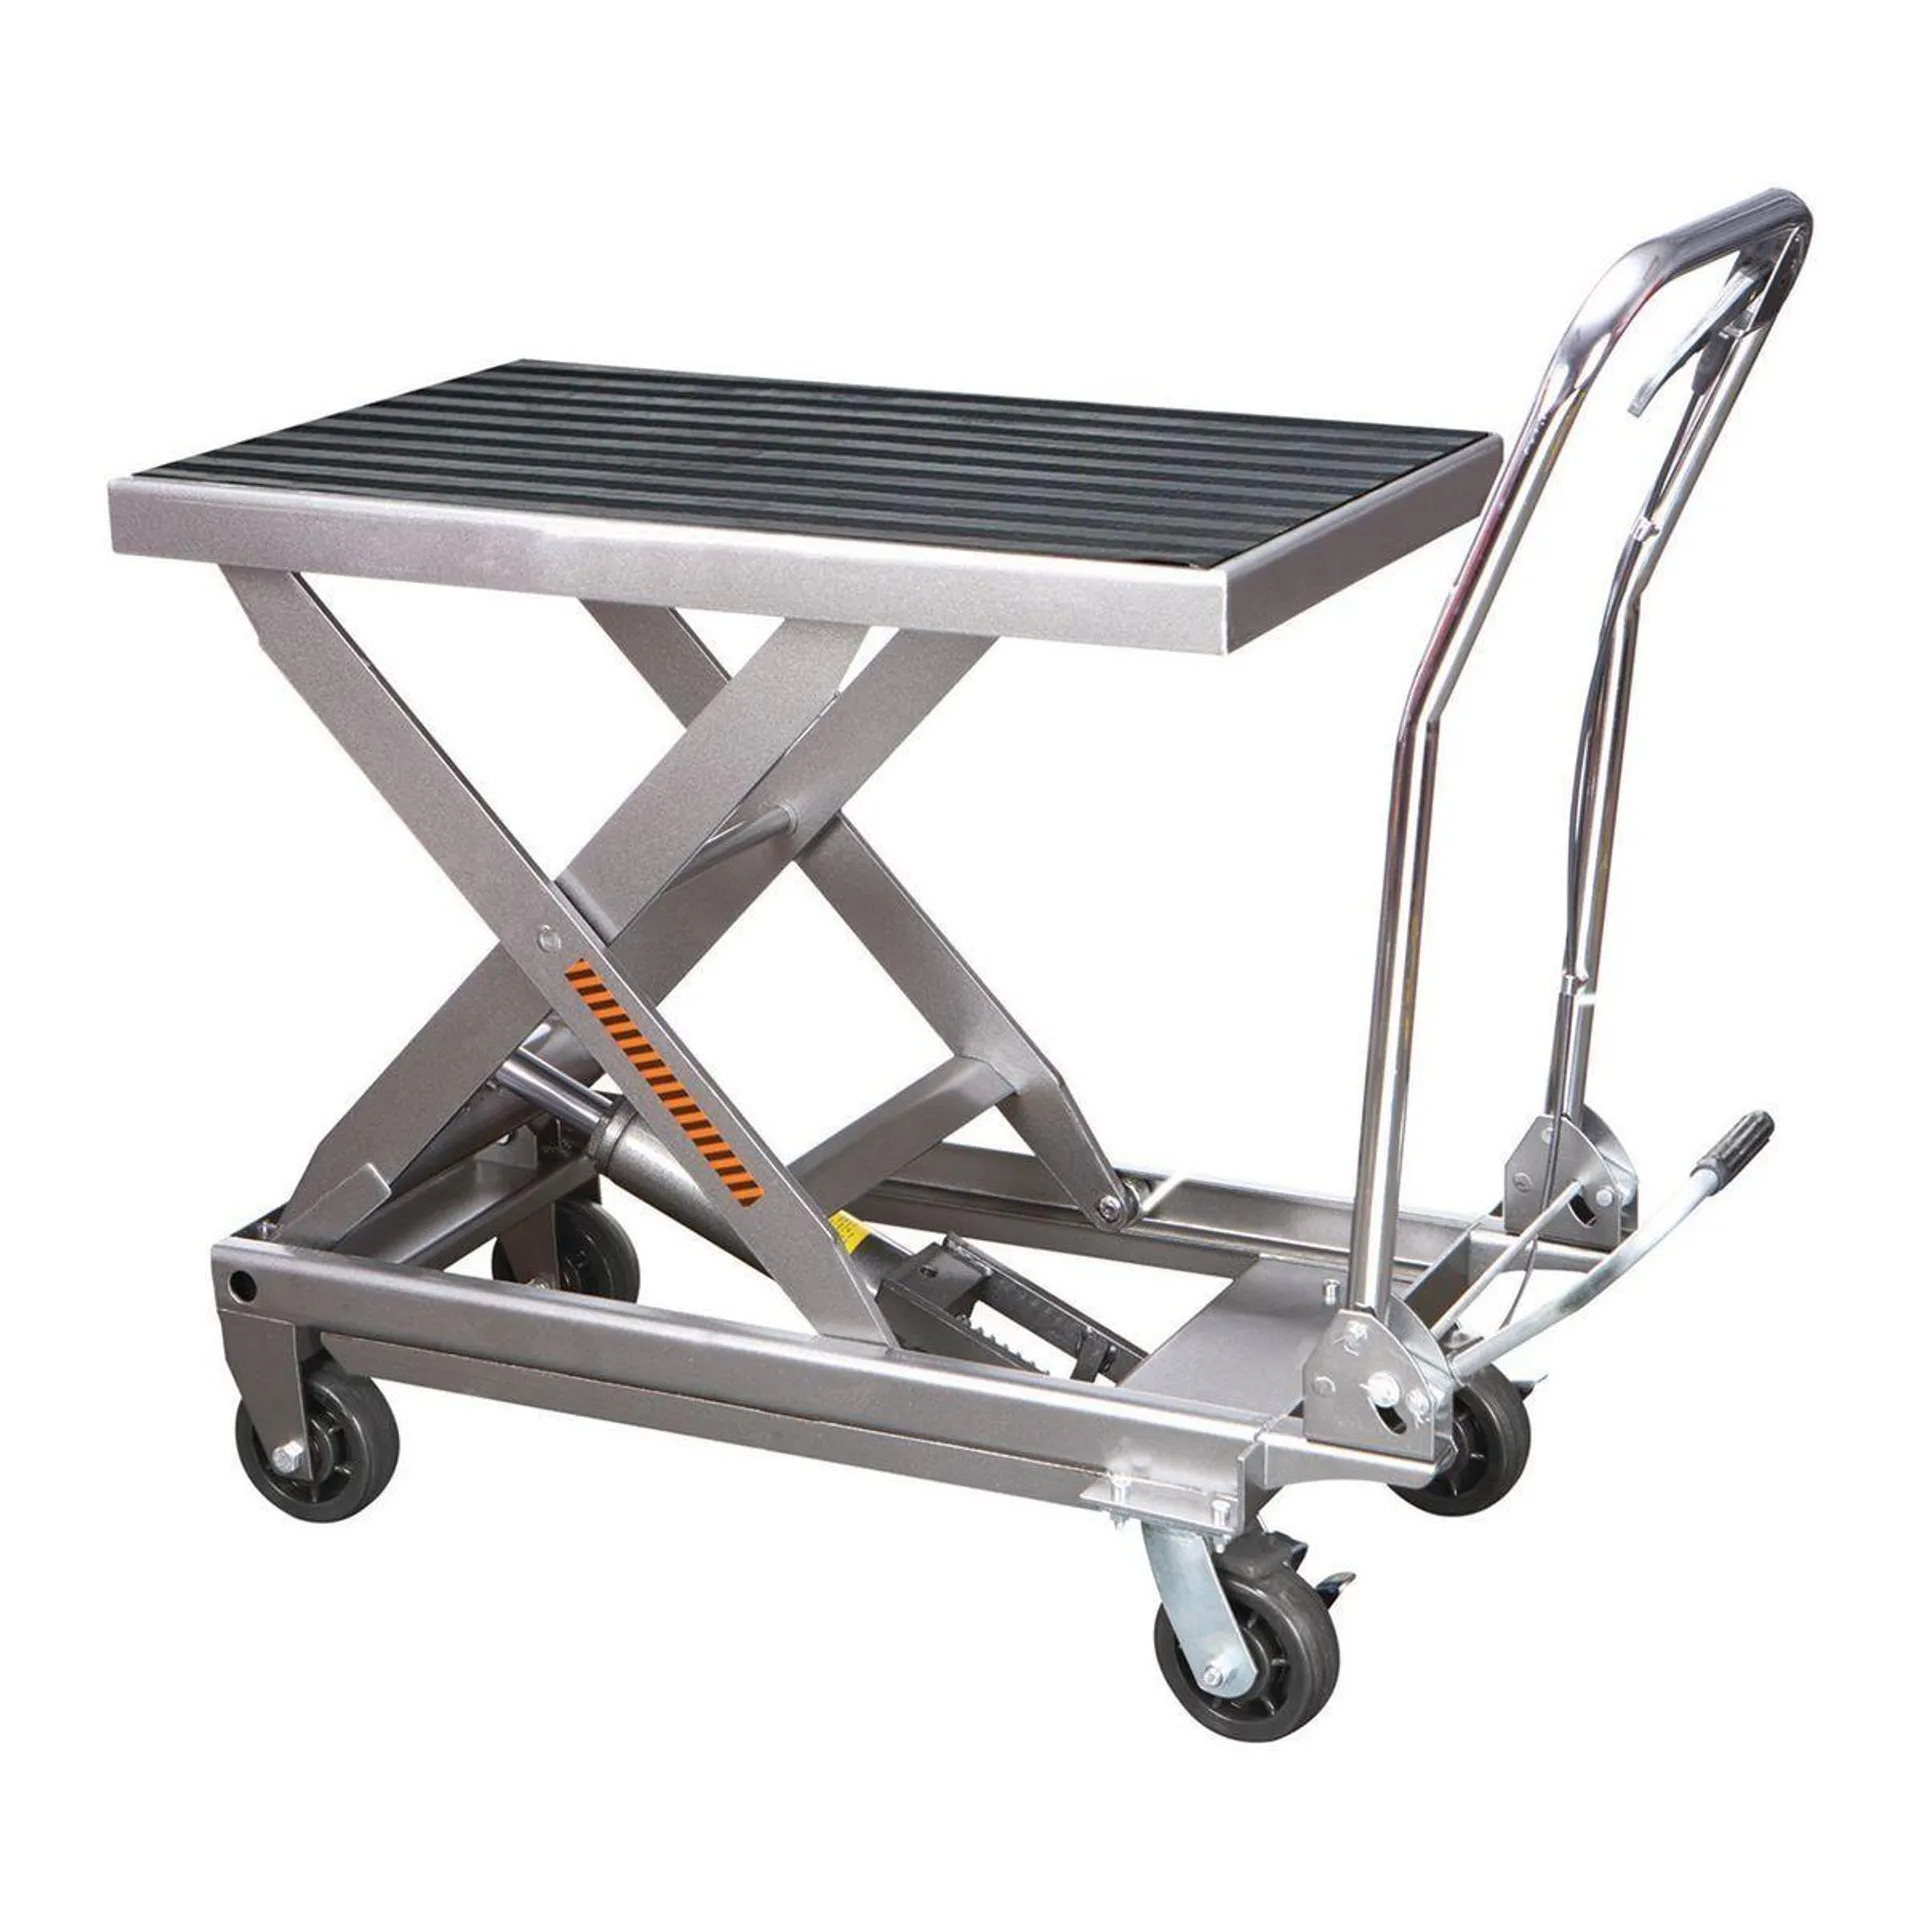 HAUL-MASTER 1000 lb. Capacity Hydraulic Table Cart